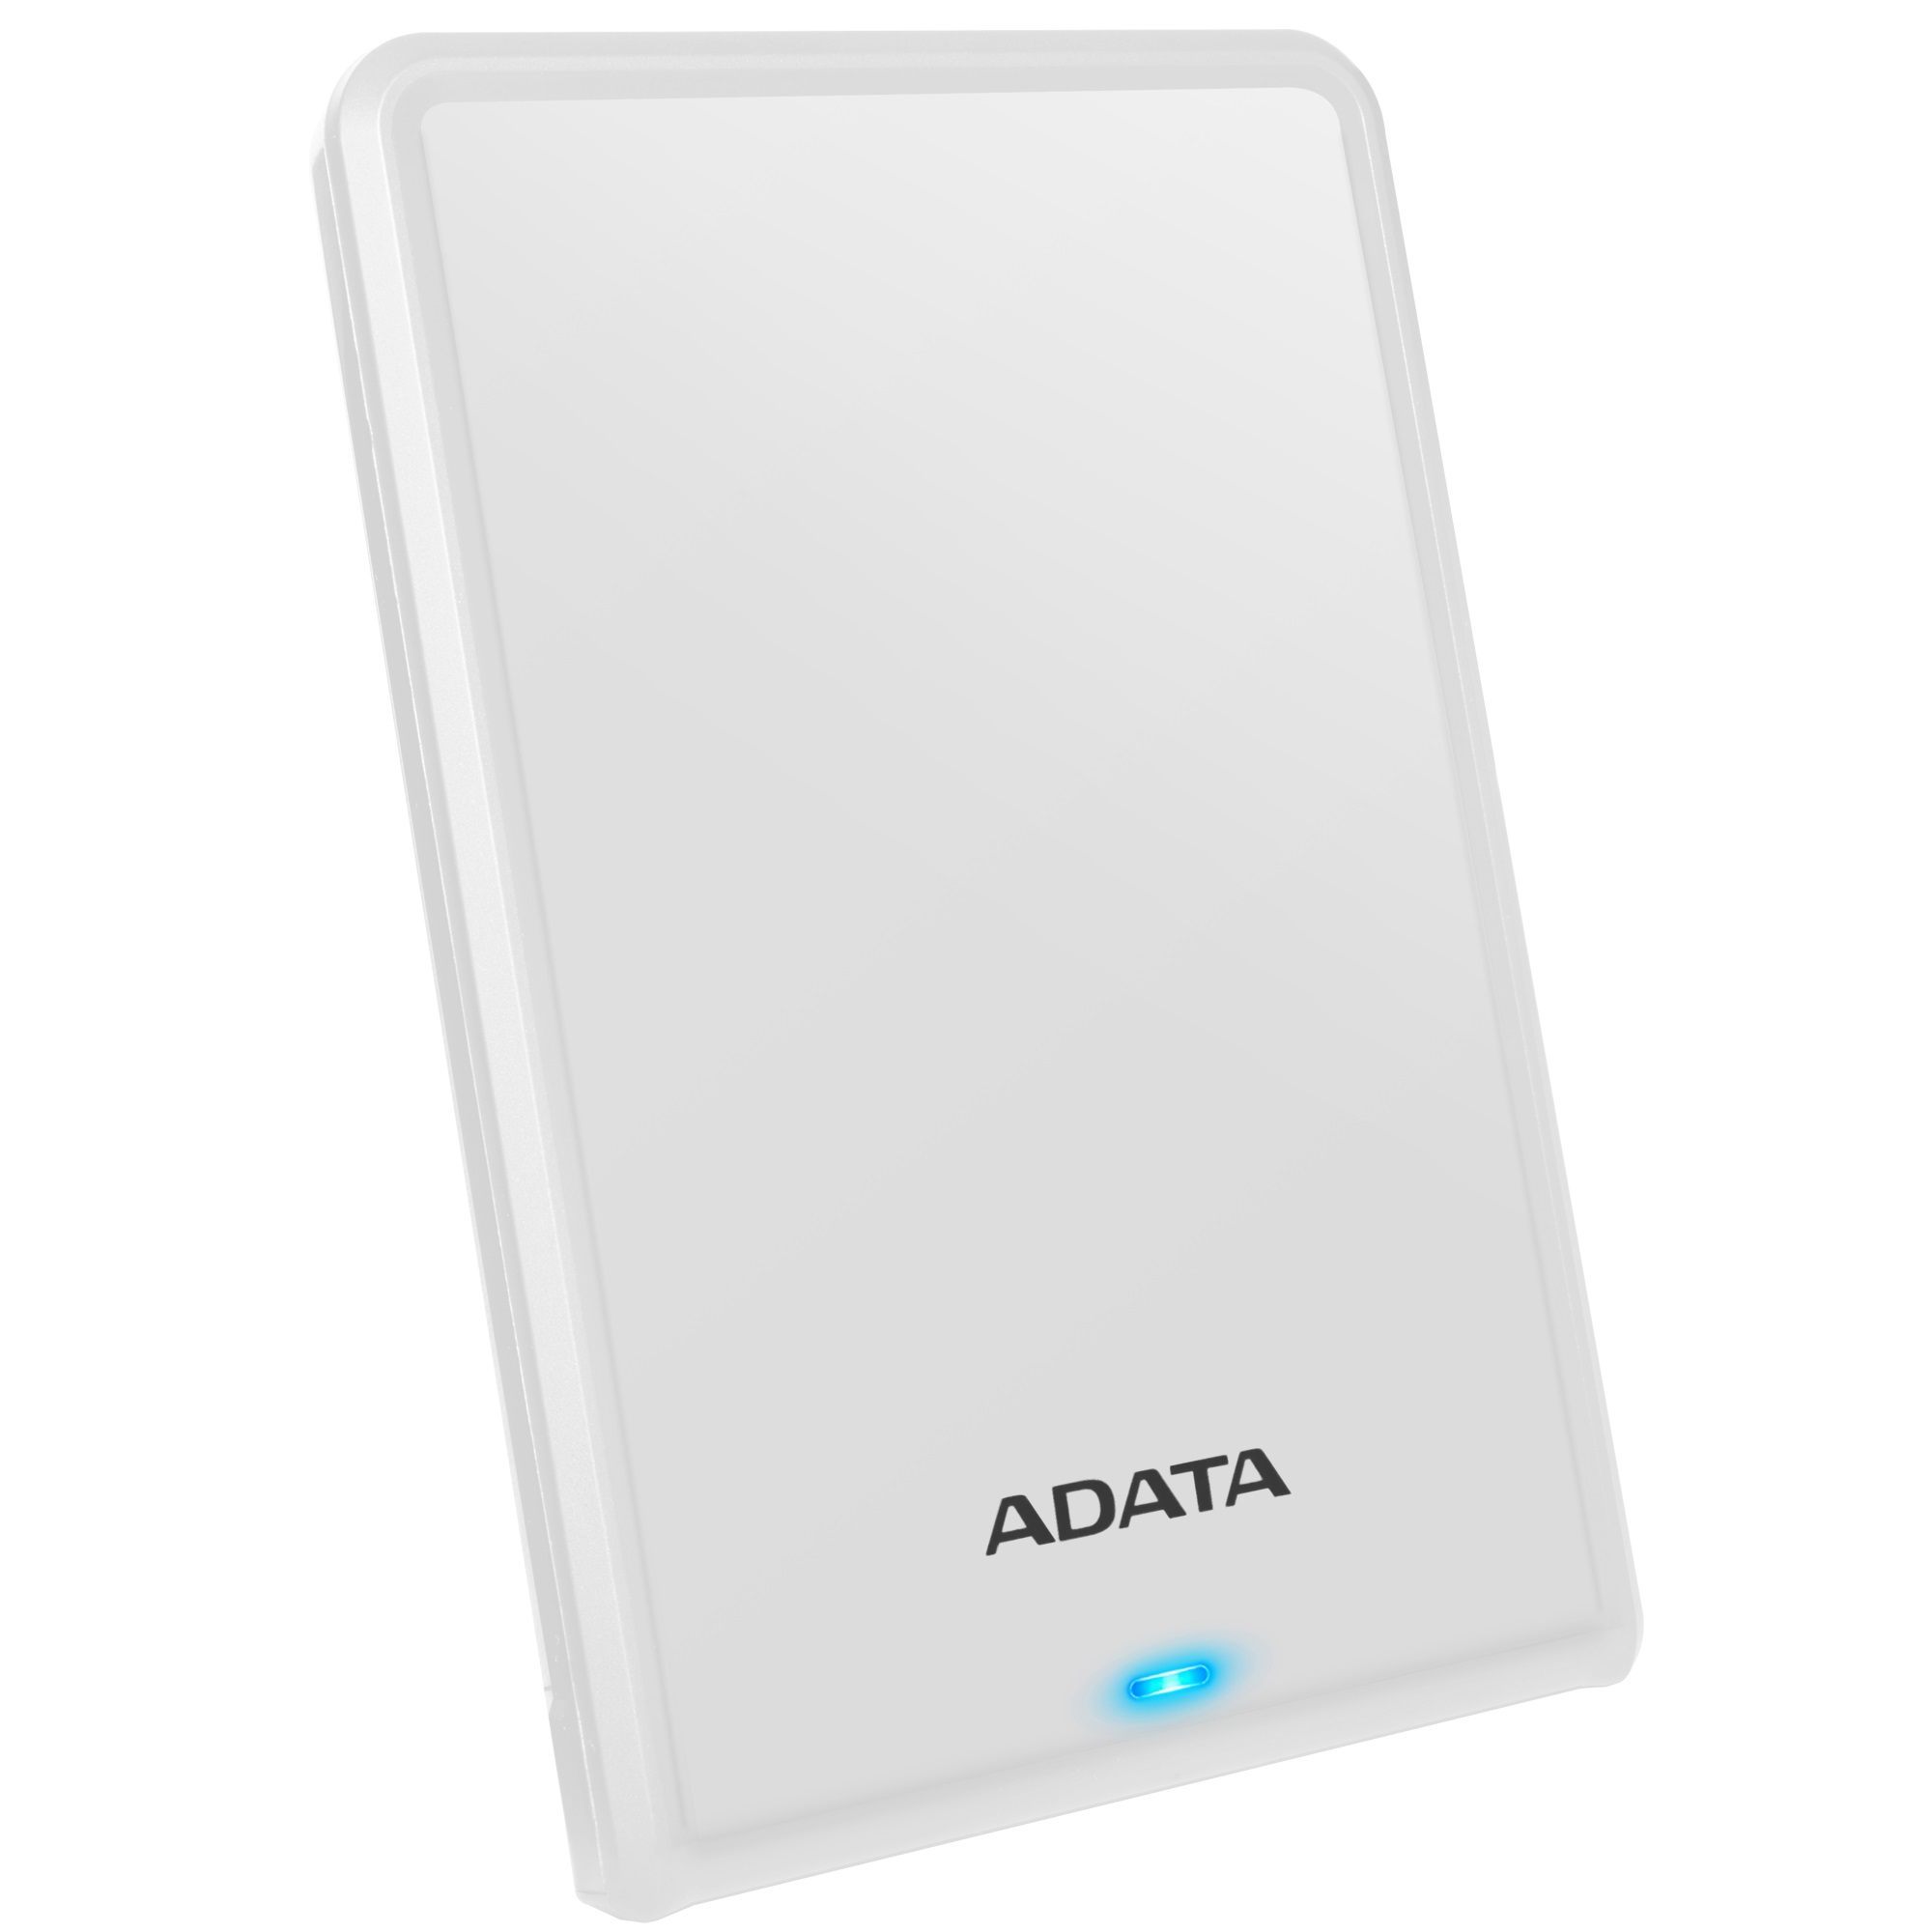 HDD EXT Adata HV620S Slim 1TB White